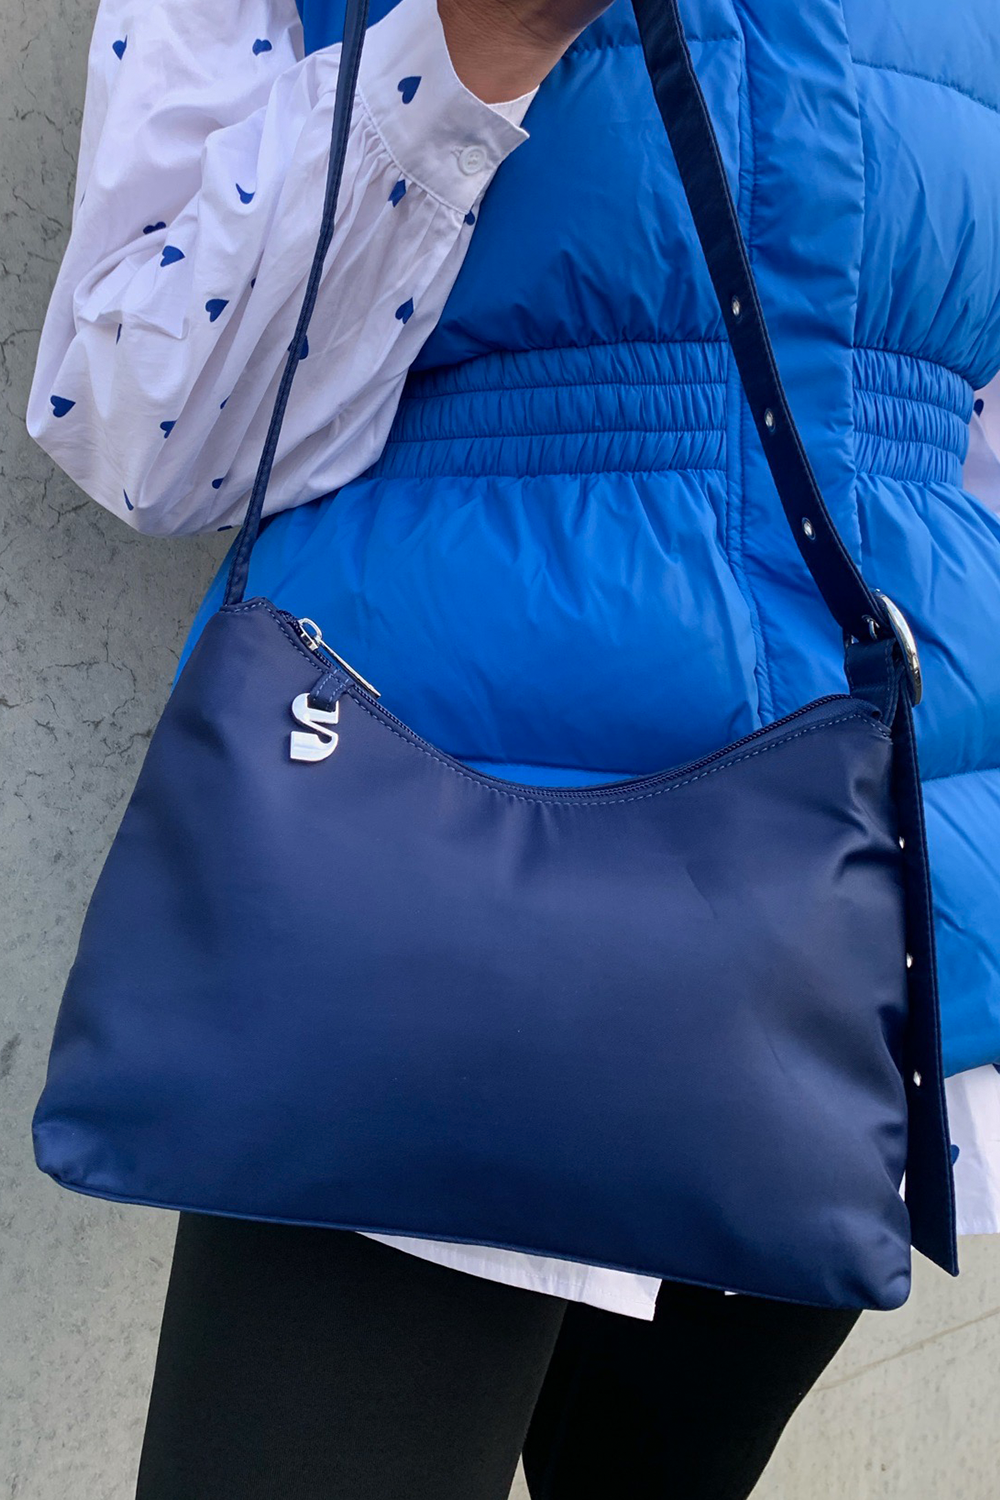 Ulrikke Shoulder bag - Galaxy - Daniel Silfen - Navy One Size 498.00 DKK - Boutiquenoir